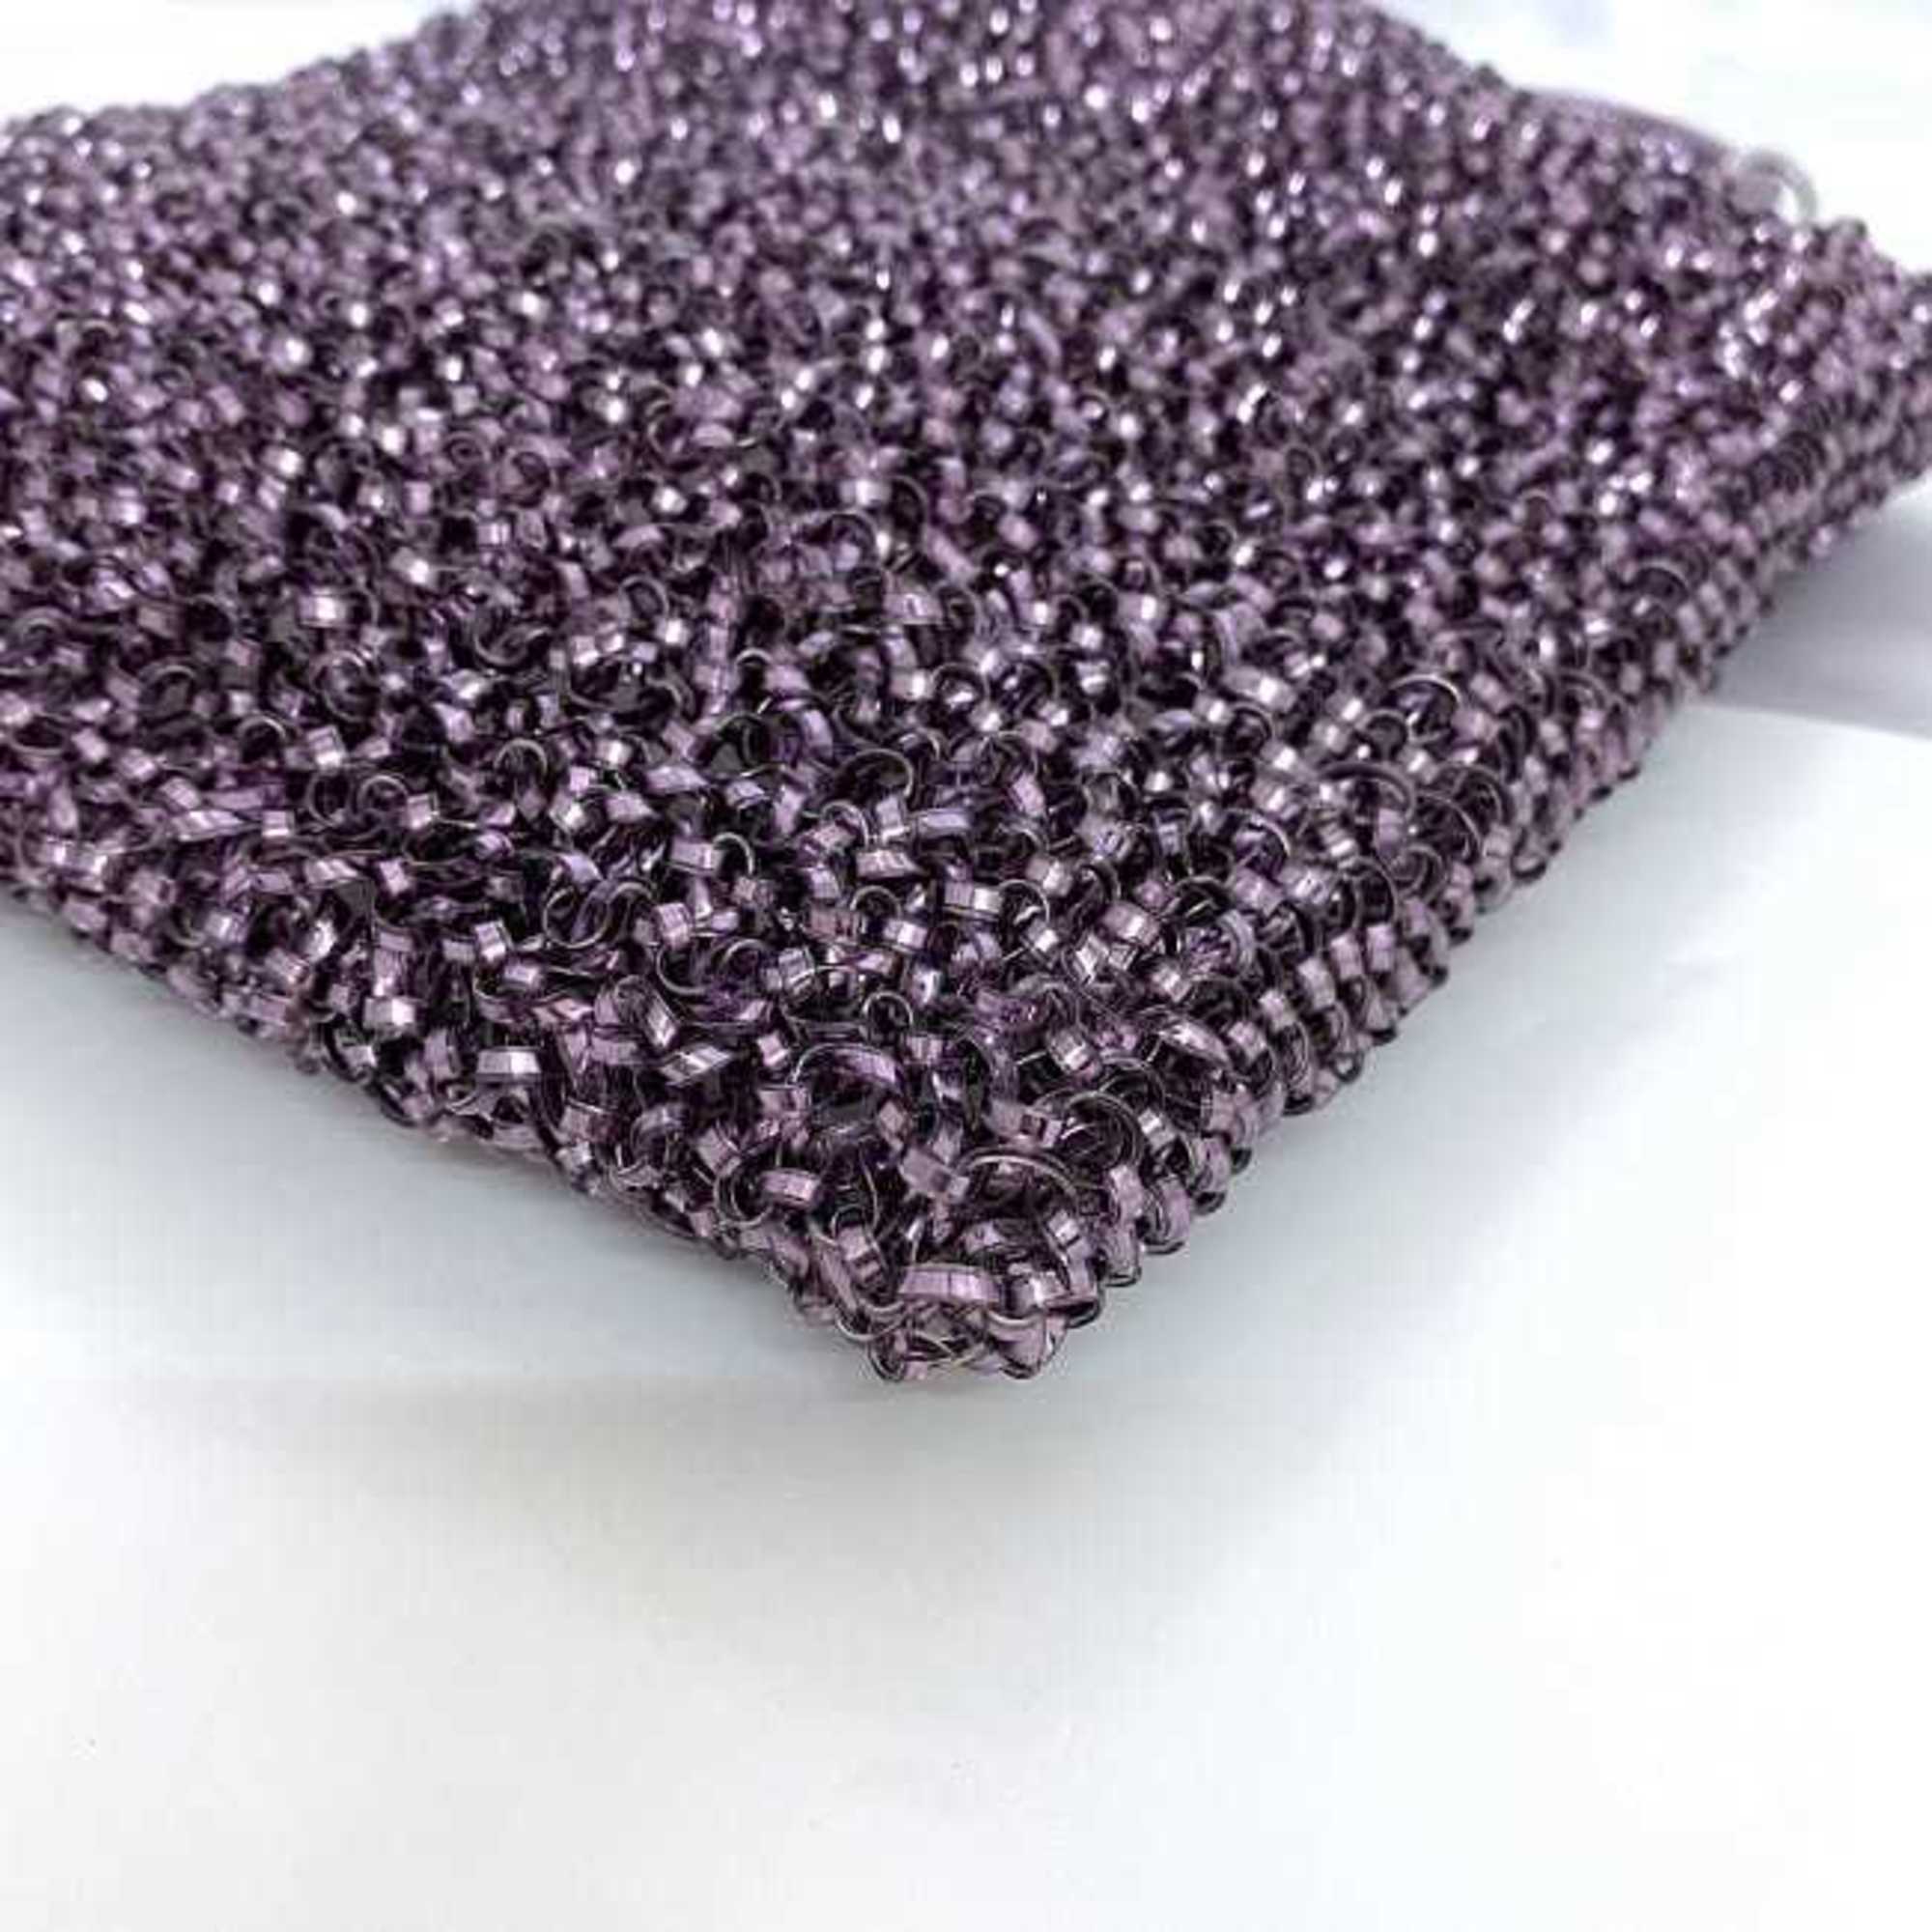 ANTEPRIMA Wire Handbag Purple ec-20542 PVC Tote Bag for Women Compact